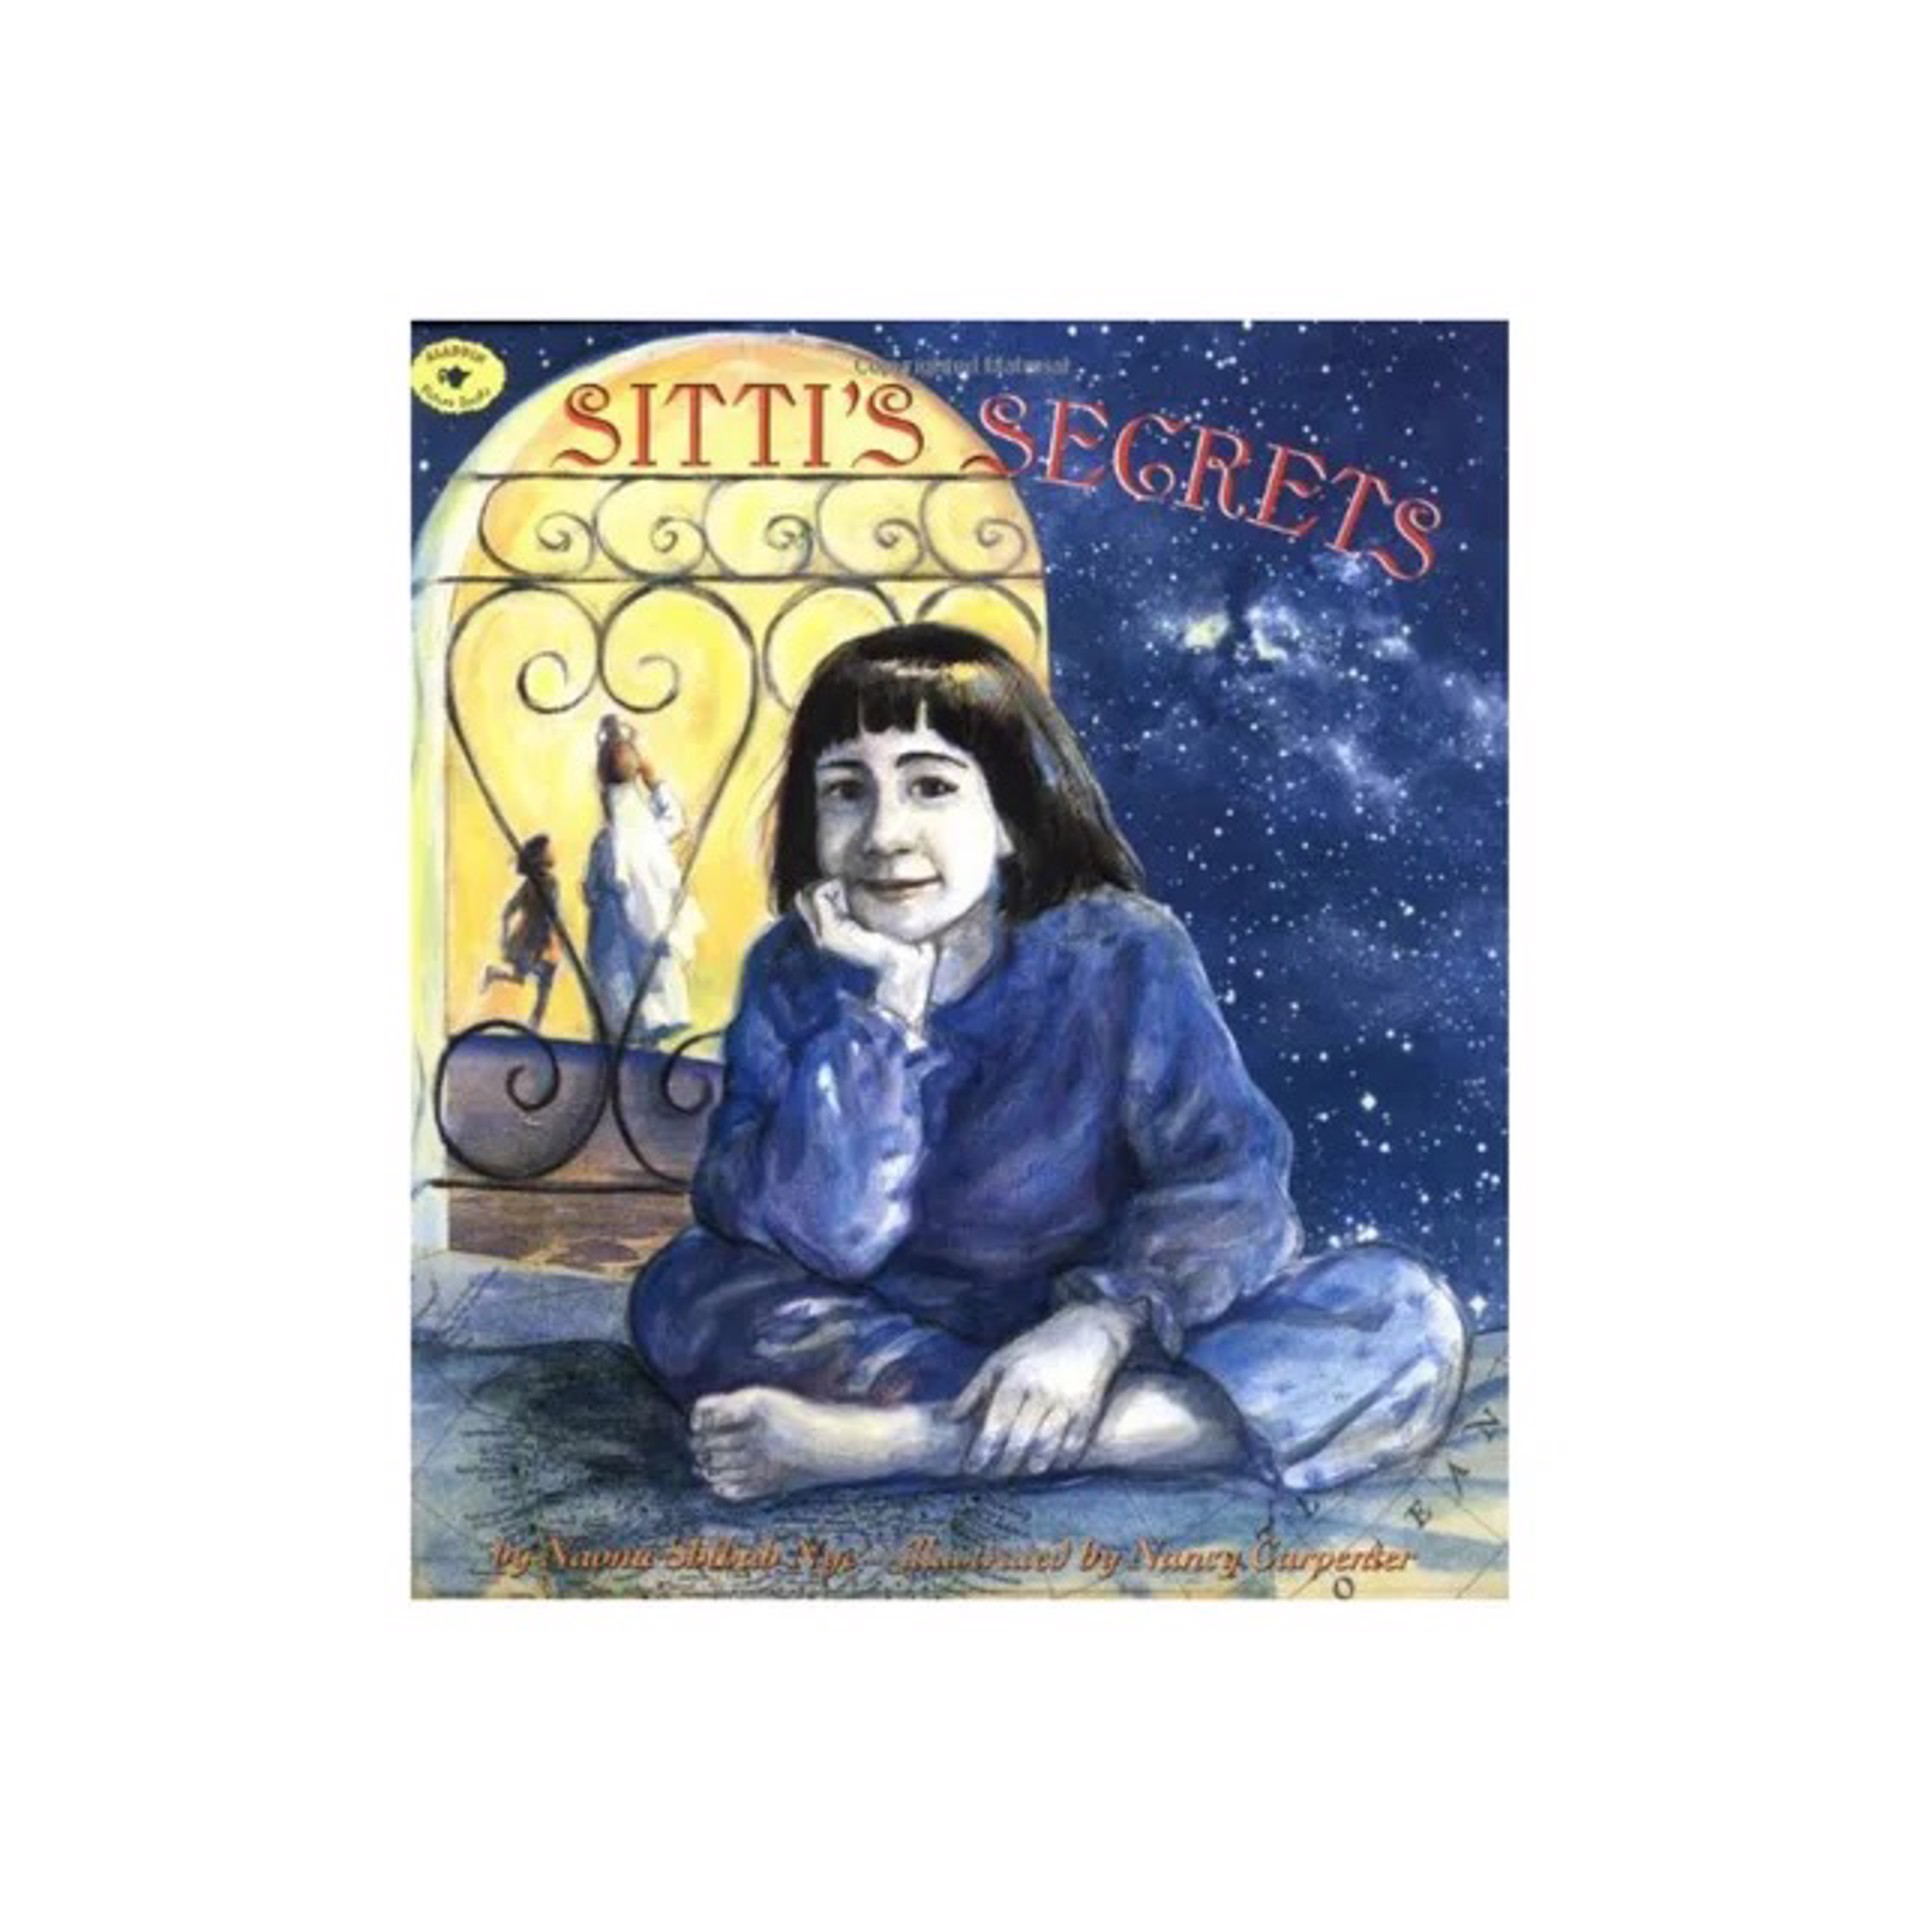 Sitti's Secrets by Naomi Shihab Nye